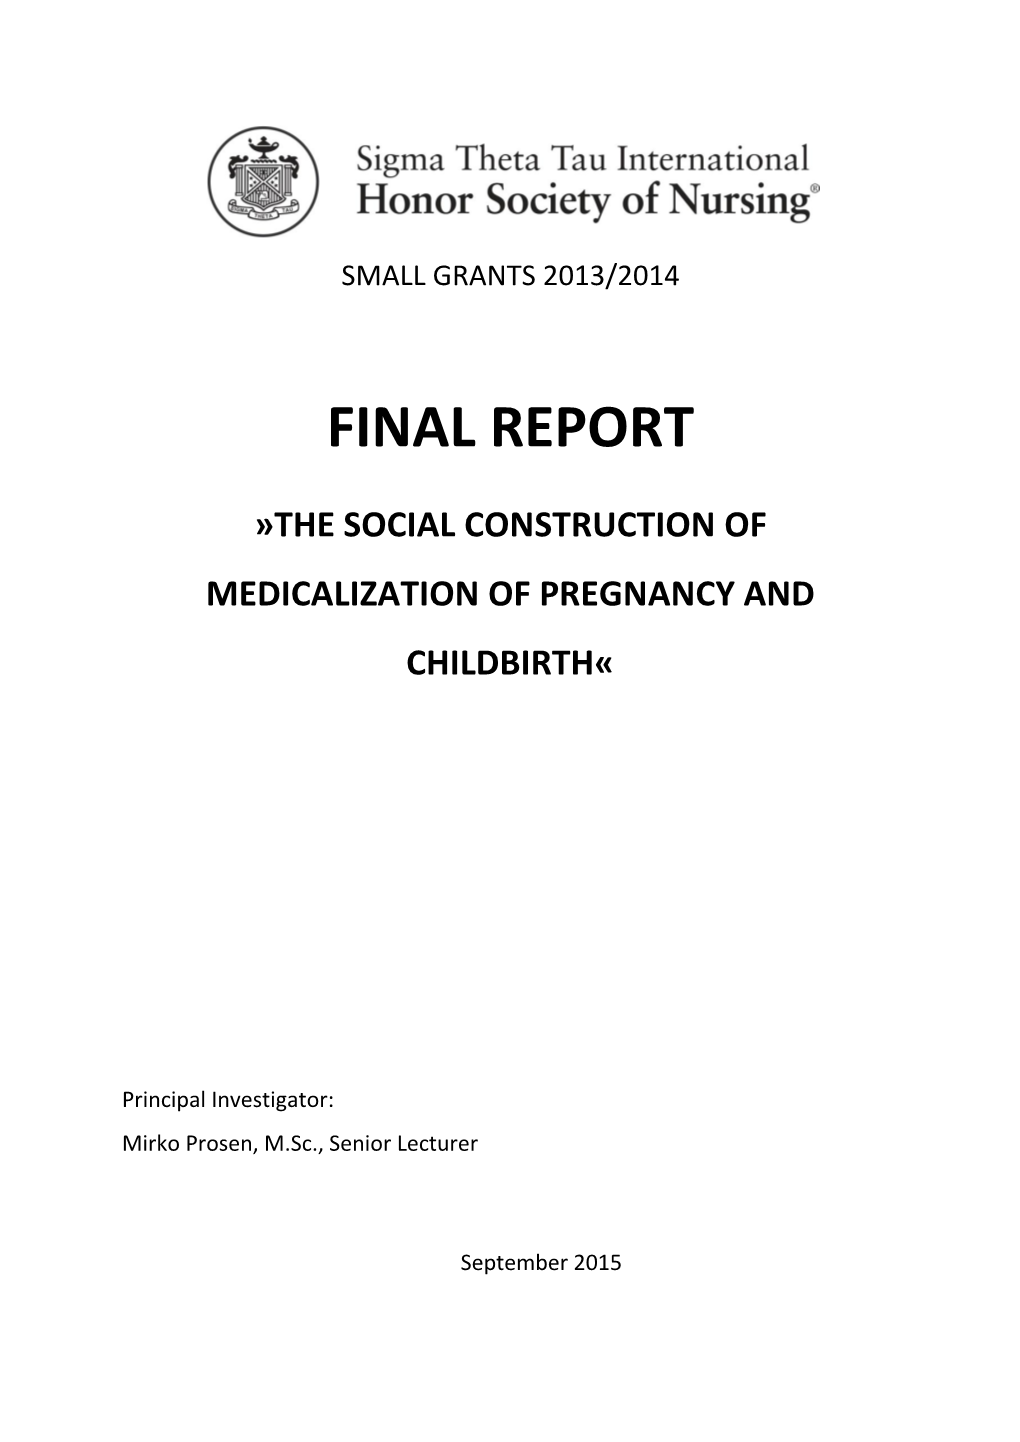 Final Report the Social Construction.Pdf